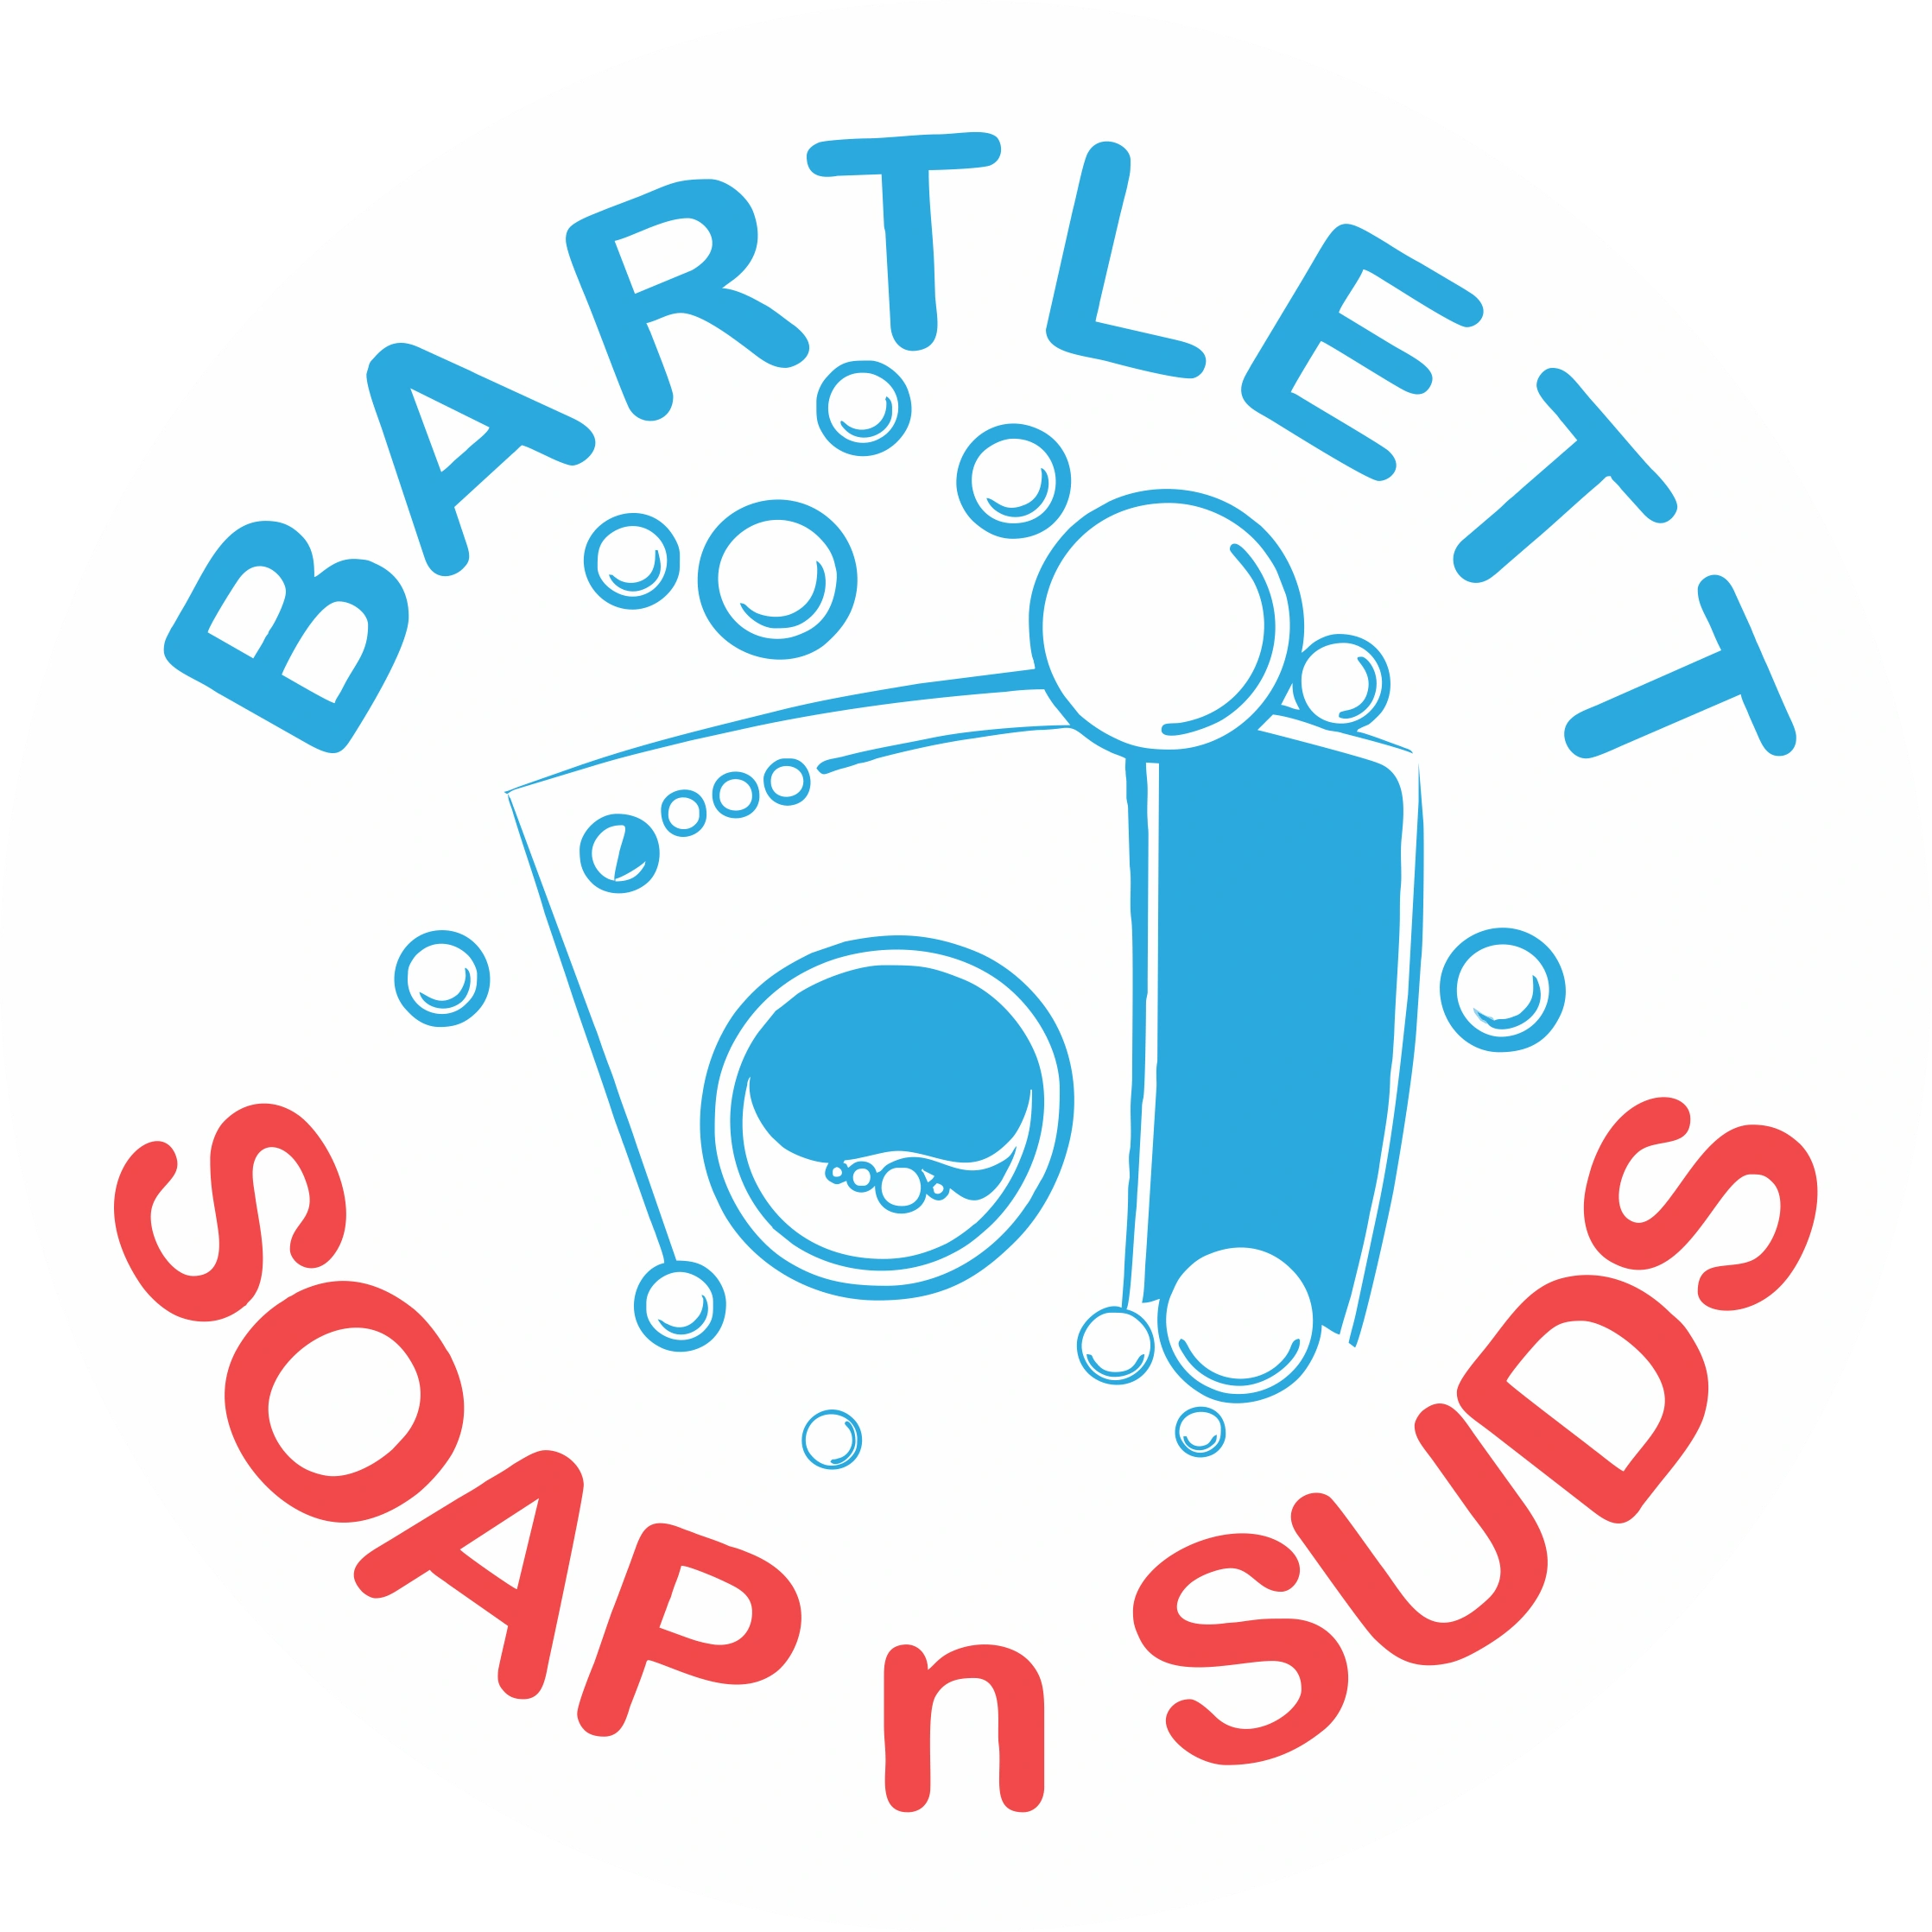 Bartlett Soap n Suds - Laundry Service, Laundry, The Laundromat